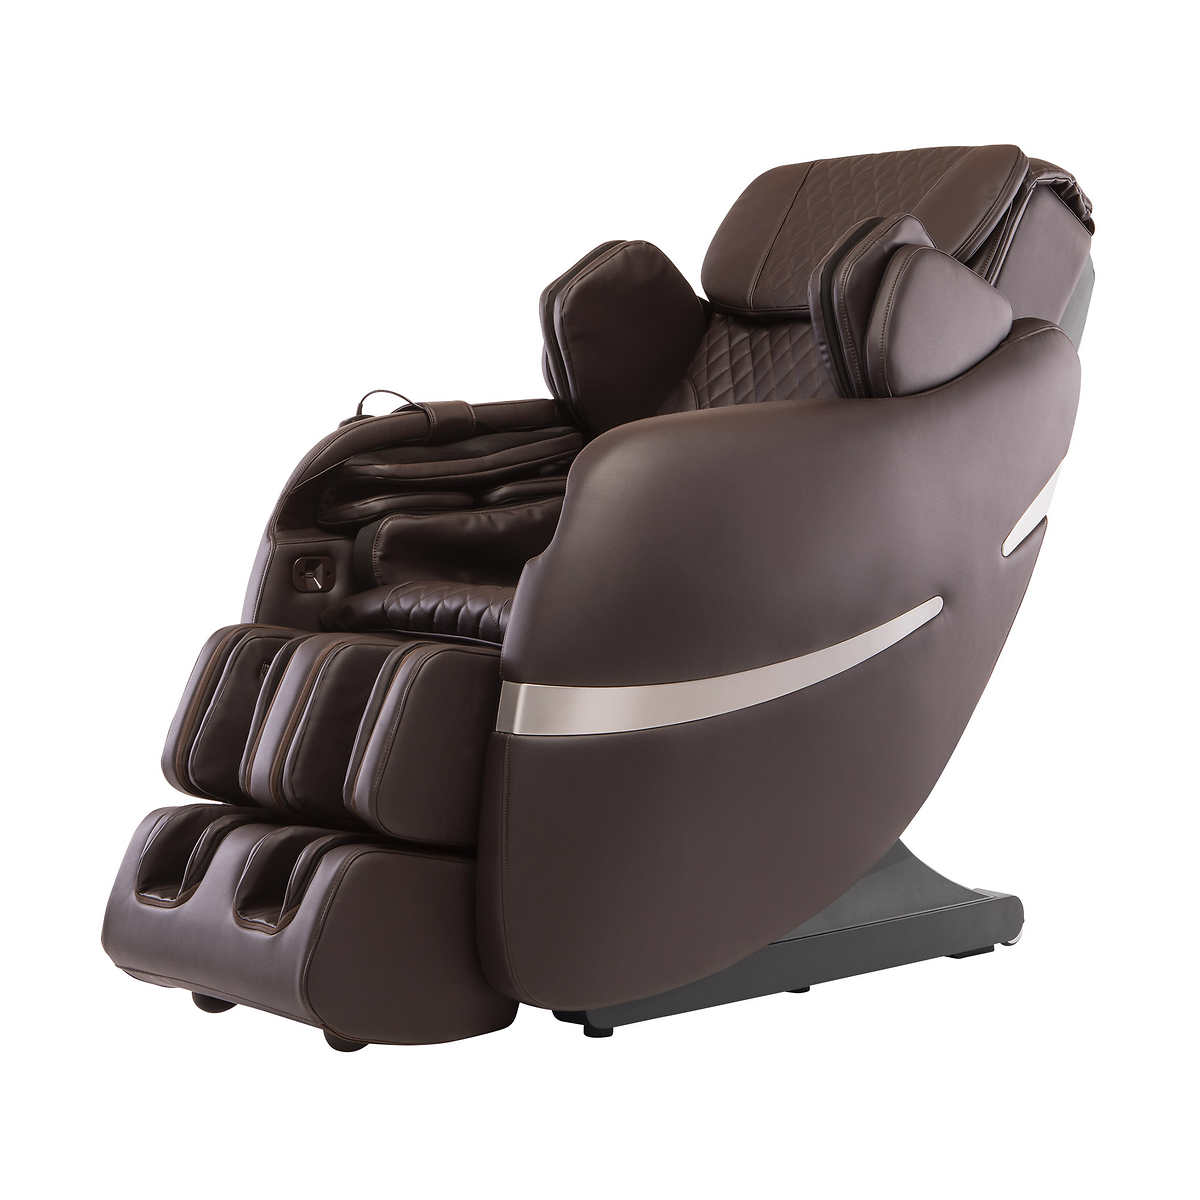 Inada Dreamwave Massage Chair Bedplanet Bedplanet Com Bed Planet Massage Chair Massage Chair